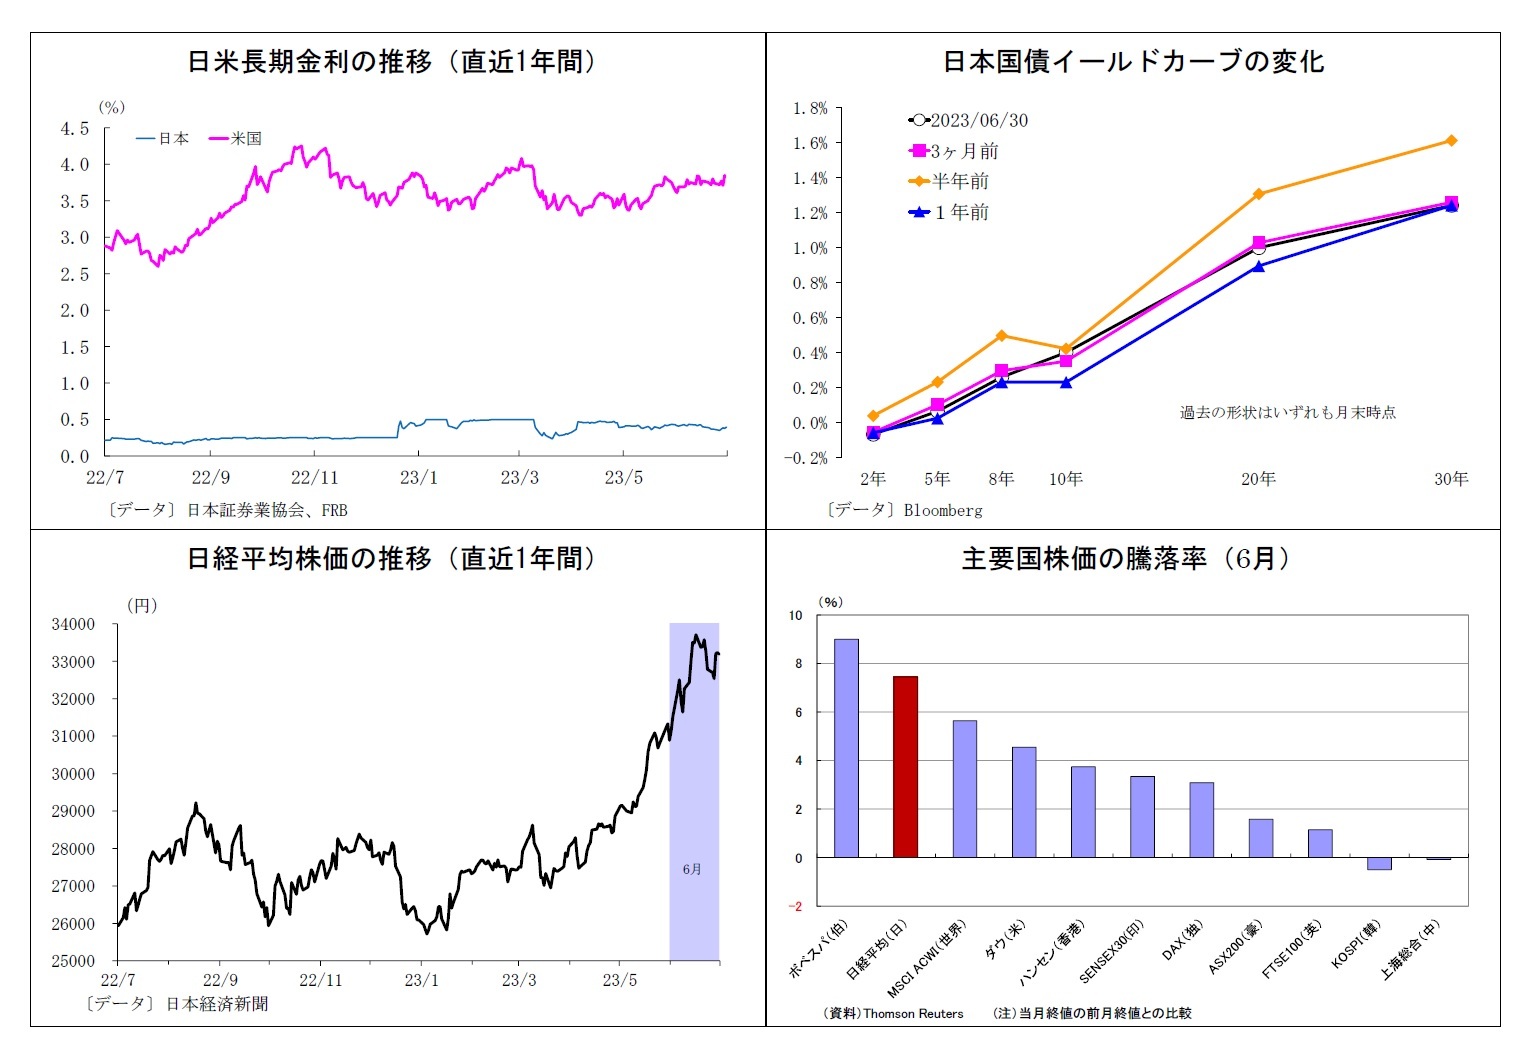 日米長期金利の推移（直近1年間）/日本国債イールドカーブの変化/日経平均株価の推移（直近1年間）/主要国株価の騰落率（6月）